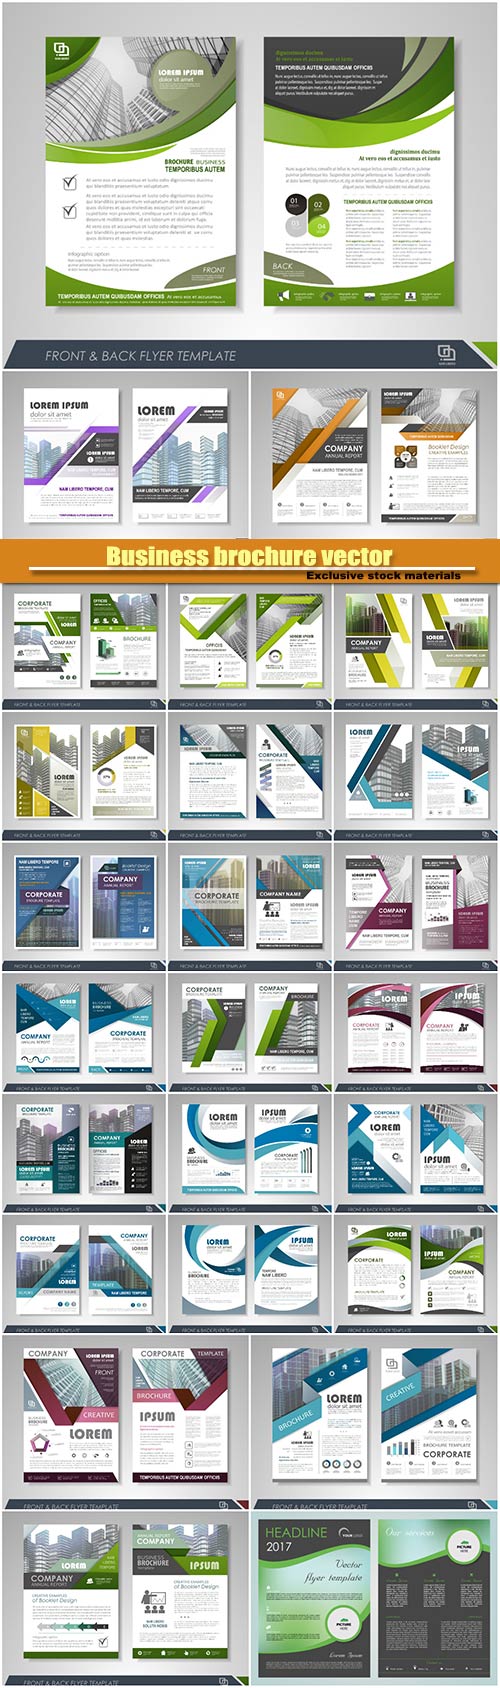 Business brochure vector, flyers templates #11